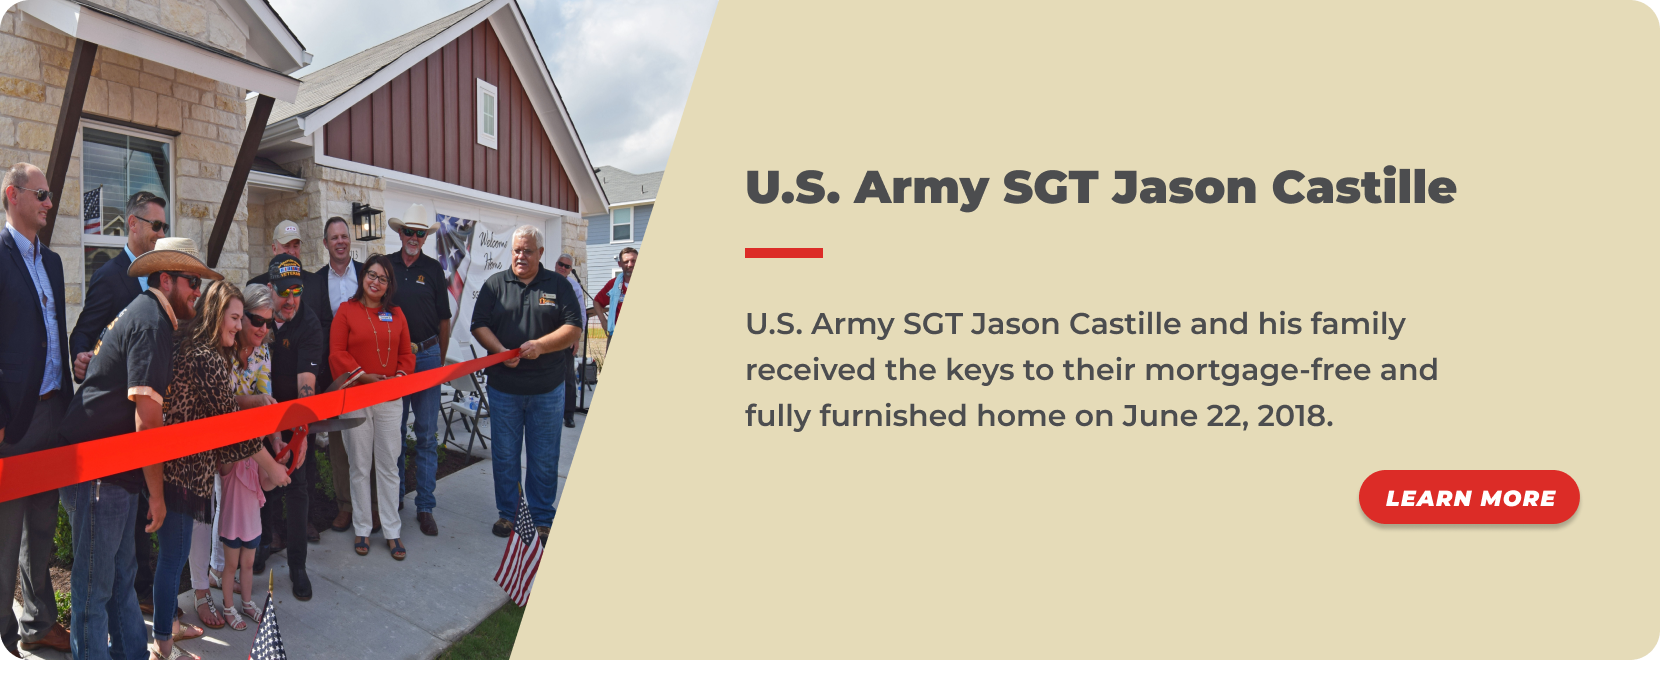 20 -U.S. Army SGT Jason Castille